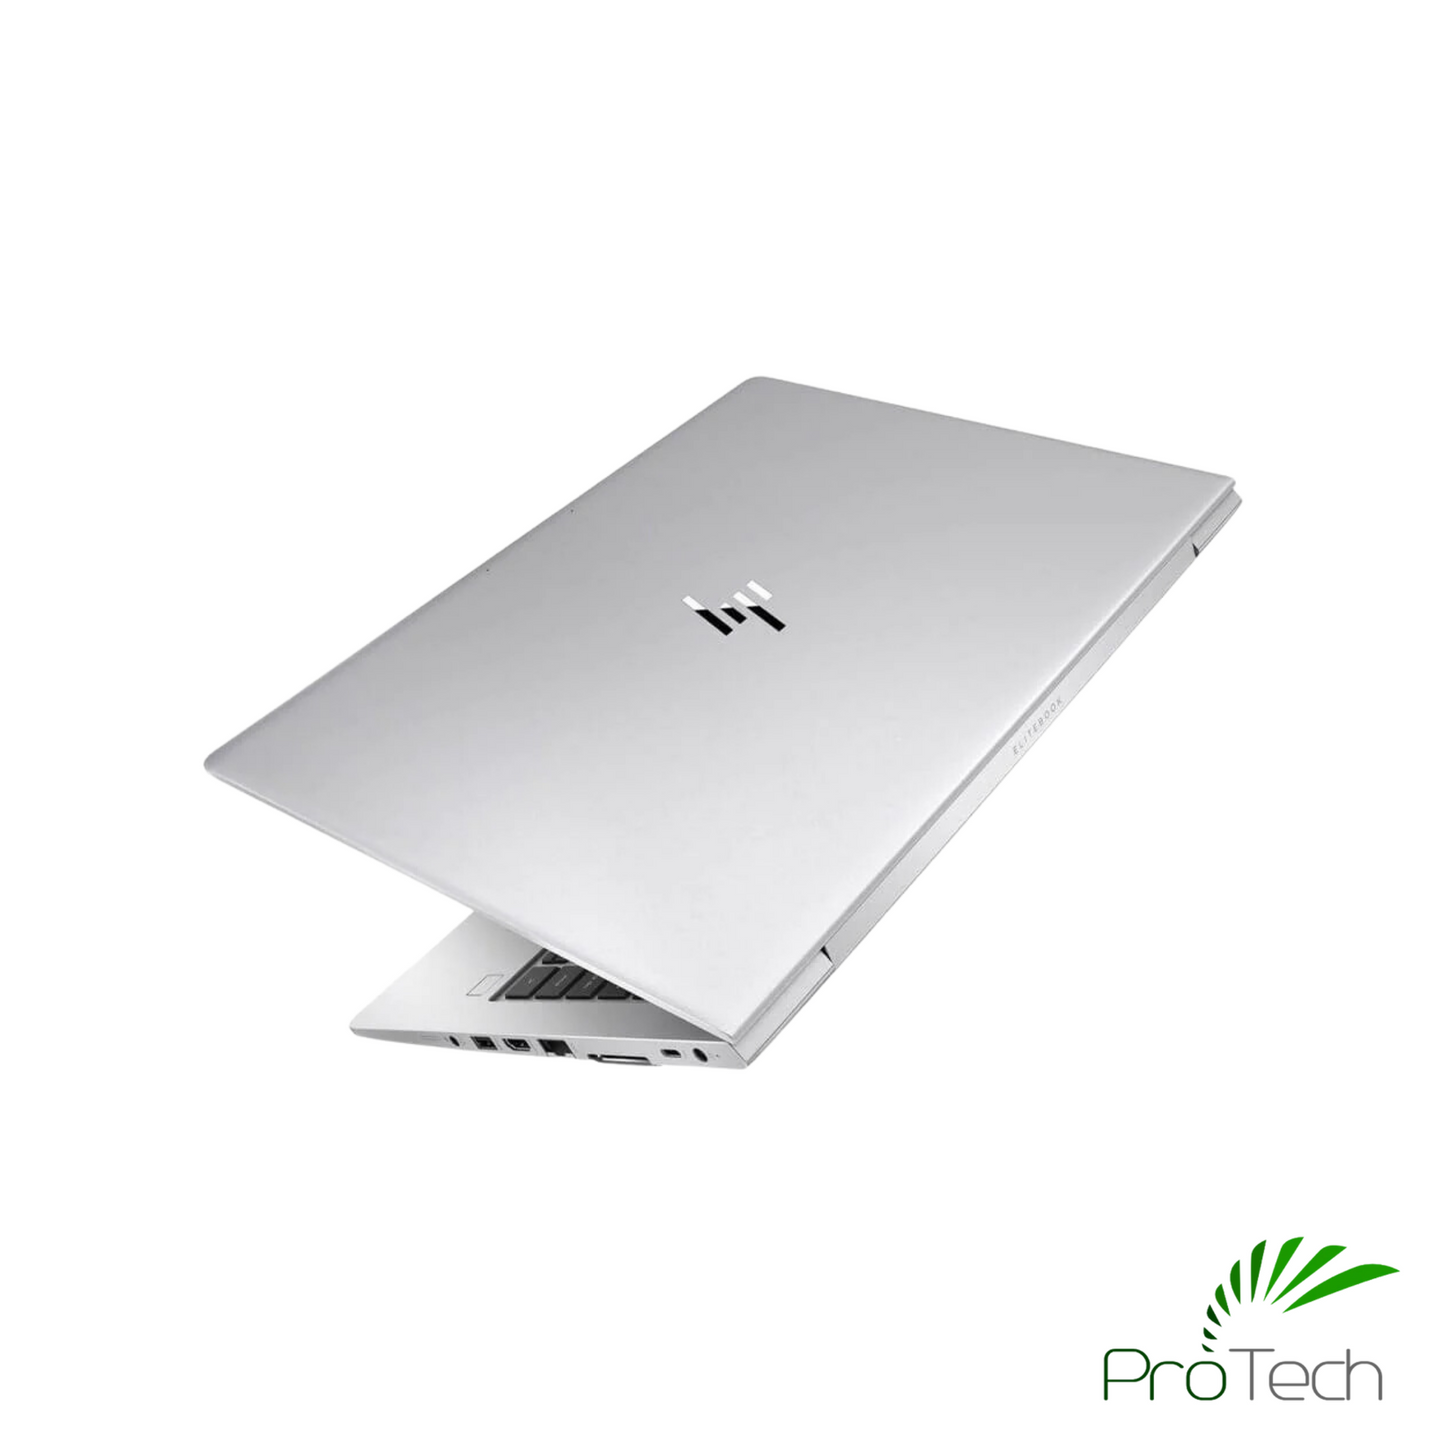 HP EliteBook 830 G5 13.3" | Core i7 | 8th Gen | 8GB RAM | 512GB SSD